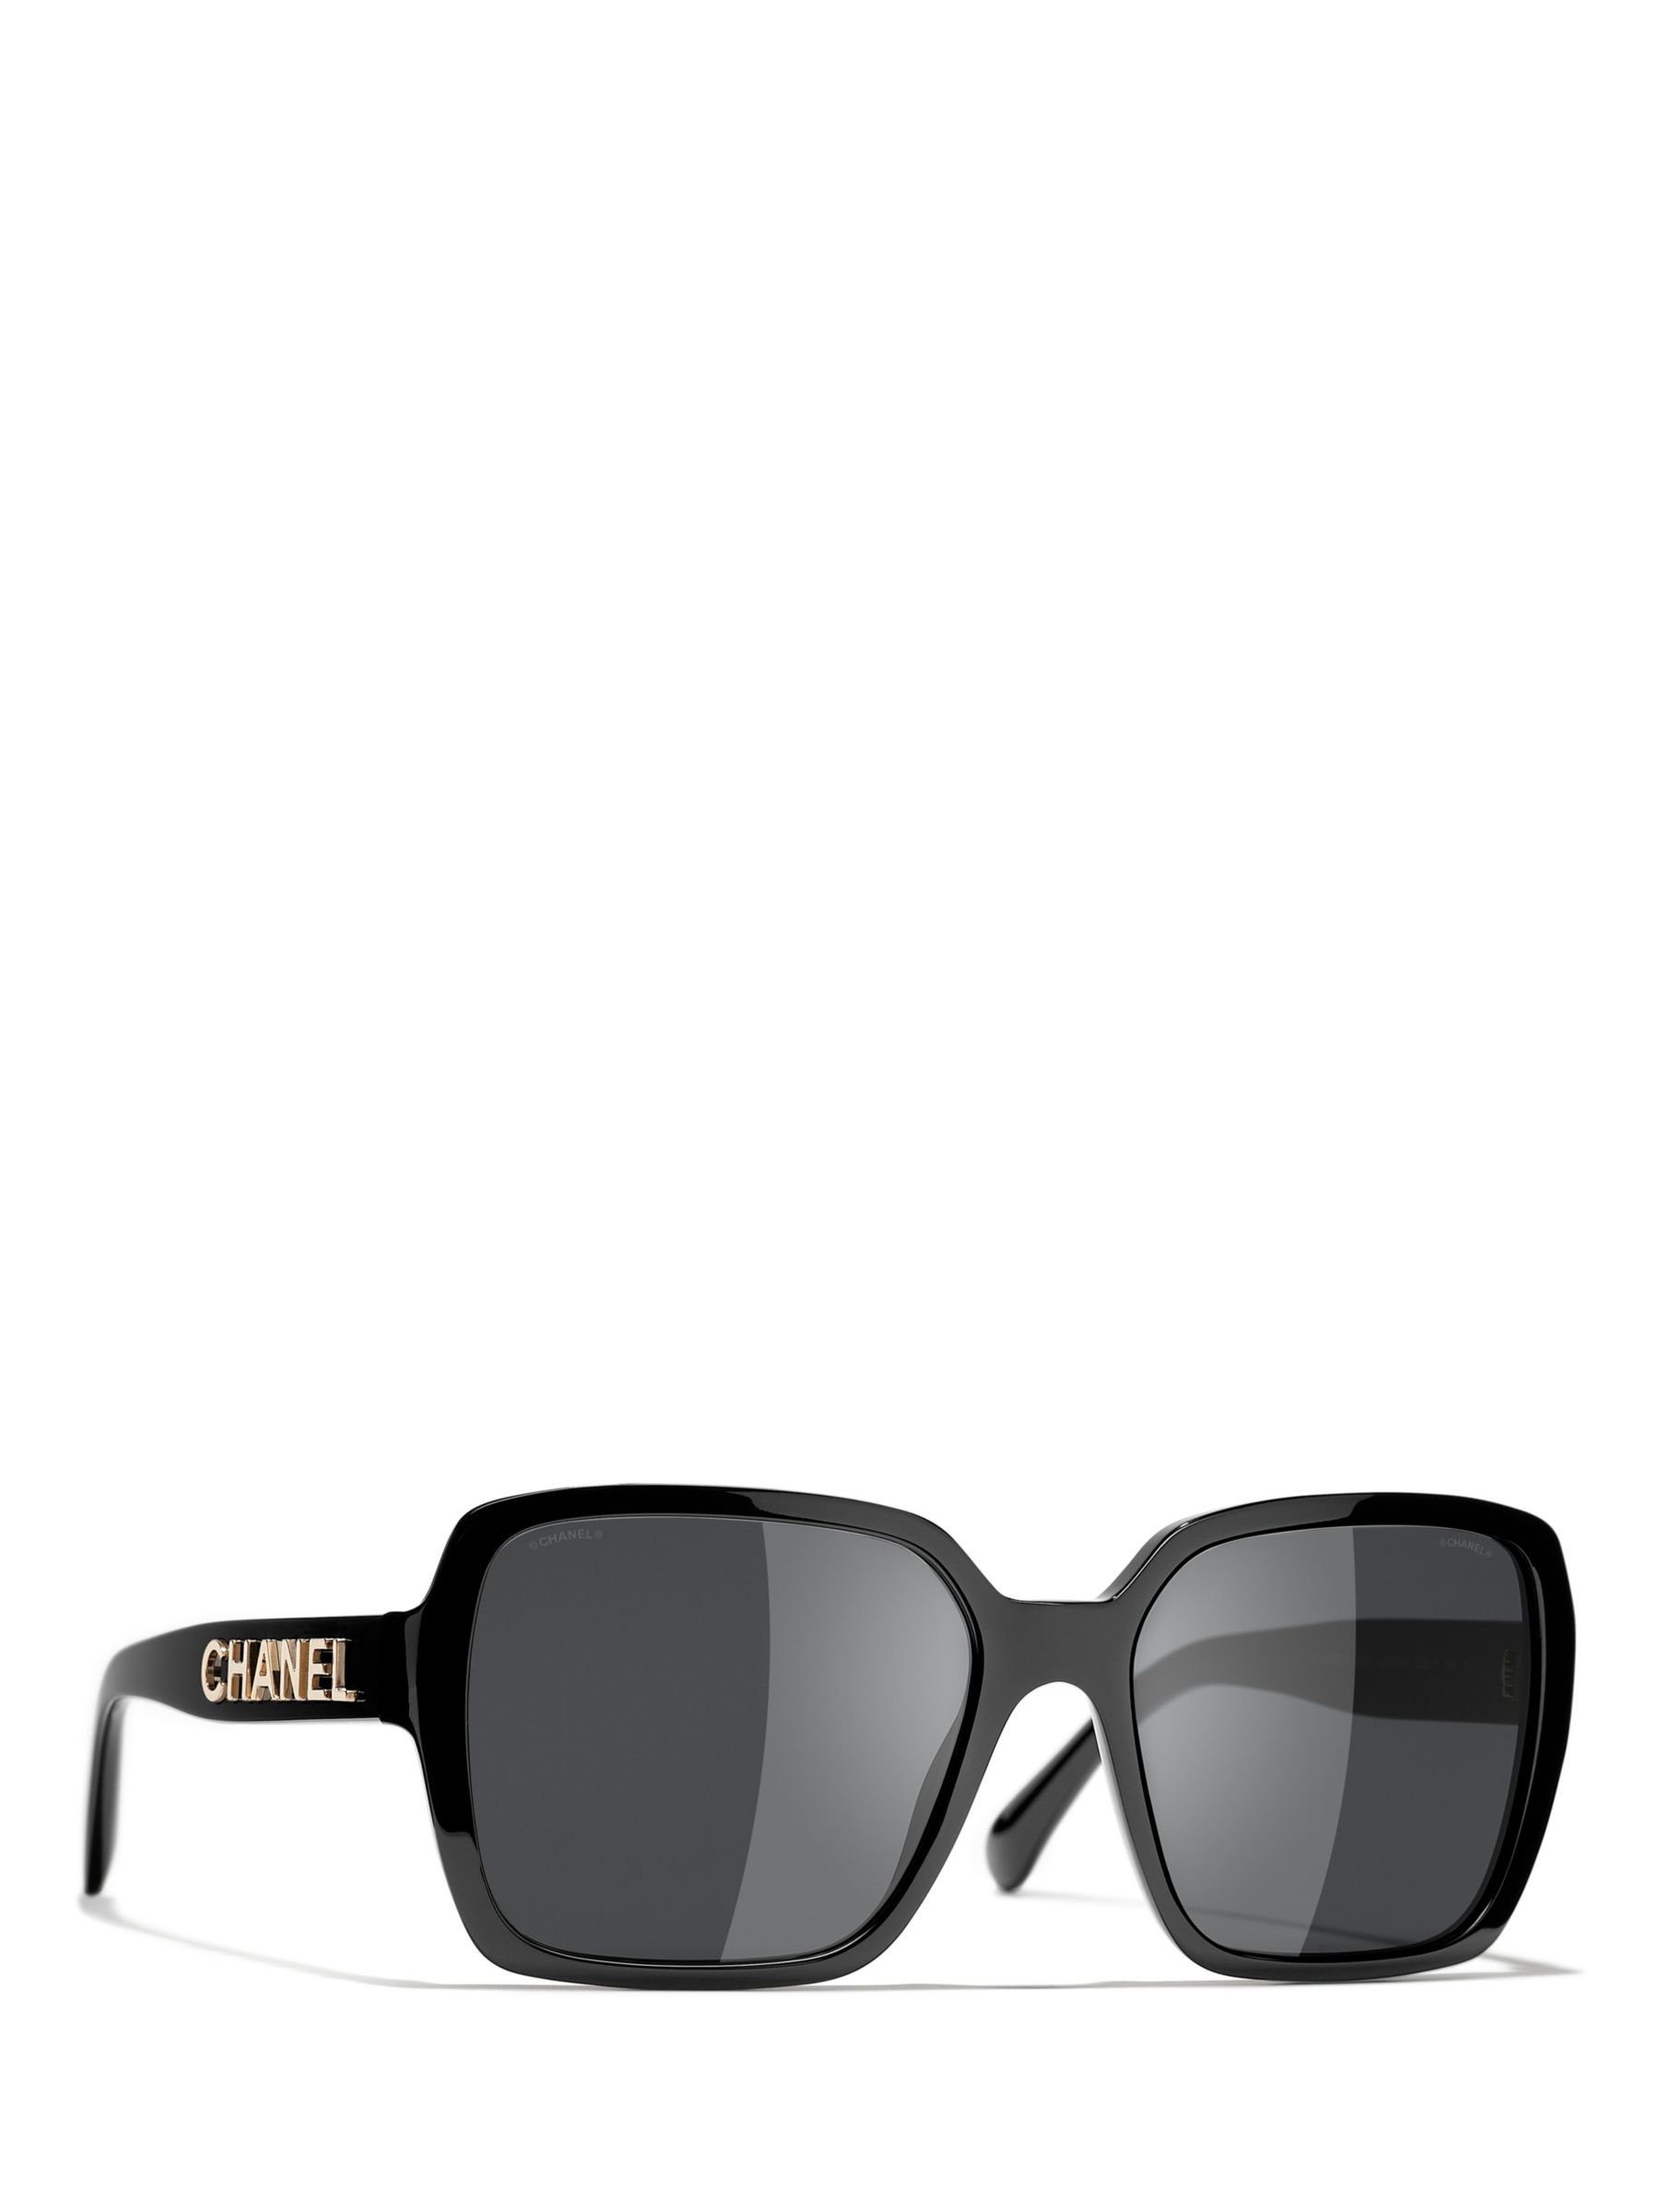 Chanel 5408 Black/Grey Sunglasses